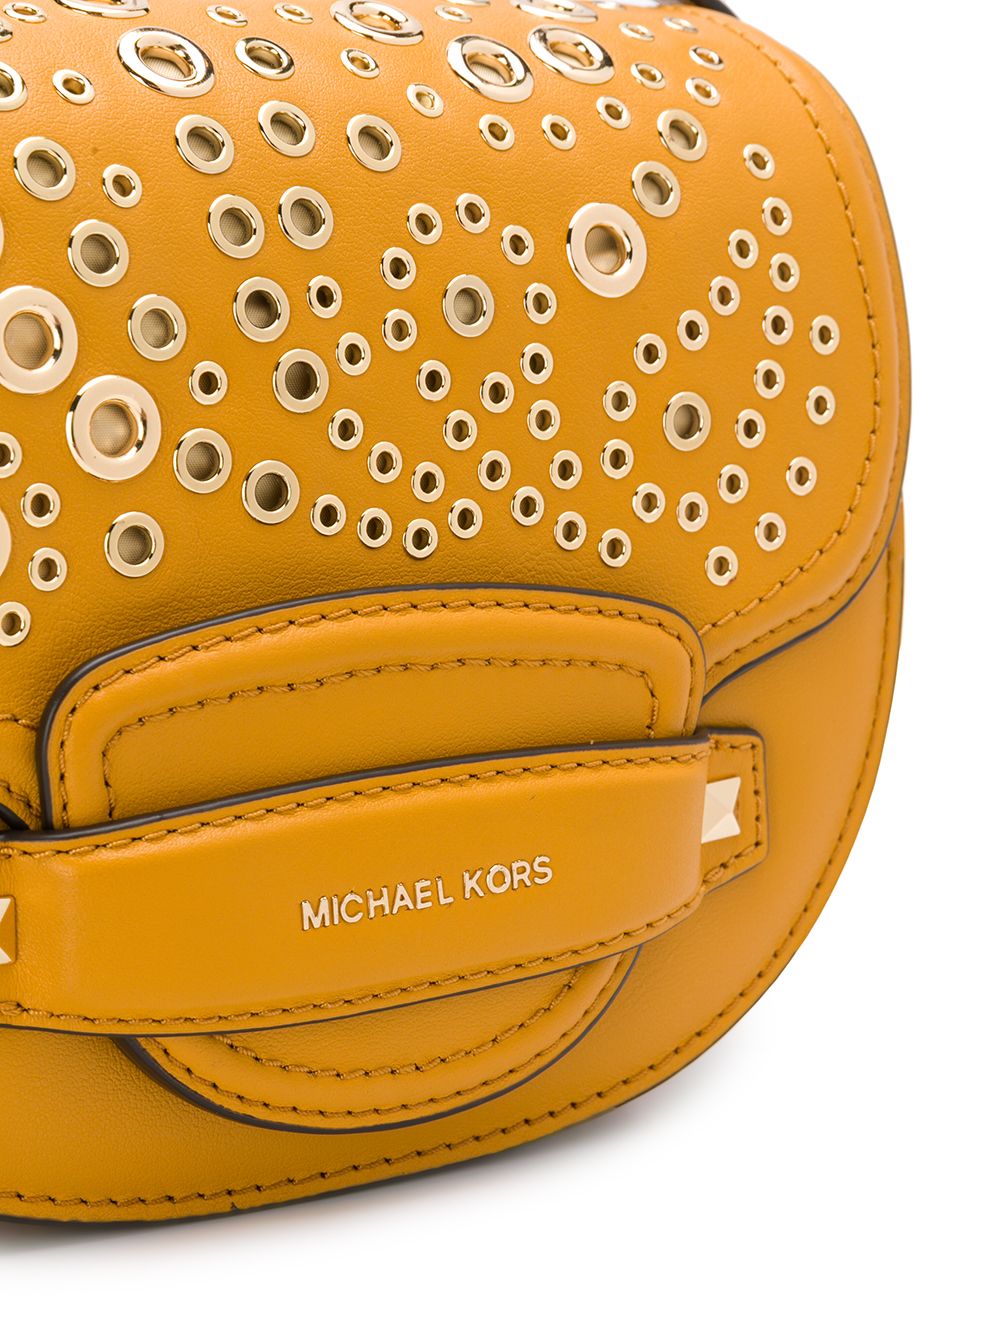 michael kors cary medium grommeted leather saddle bag